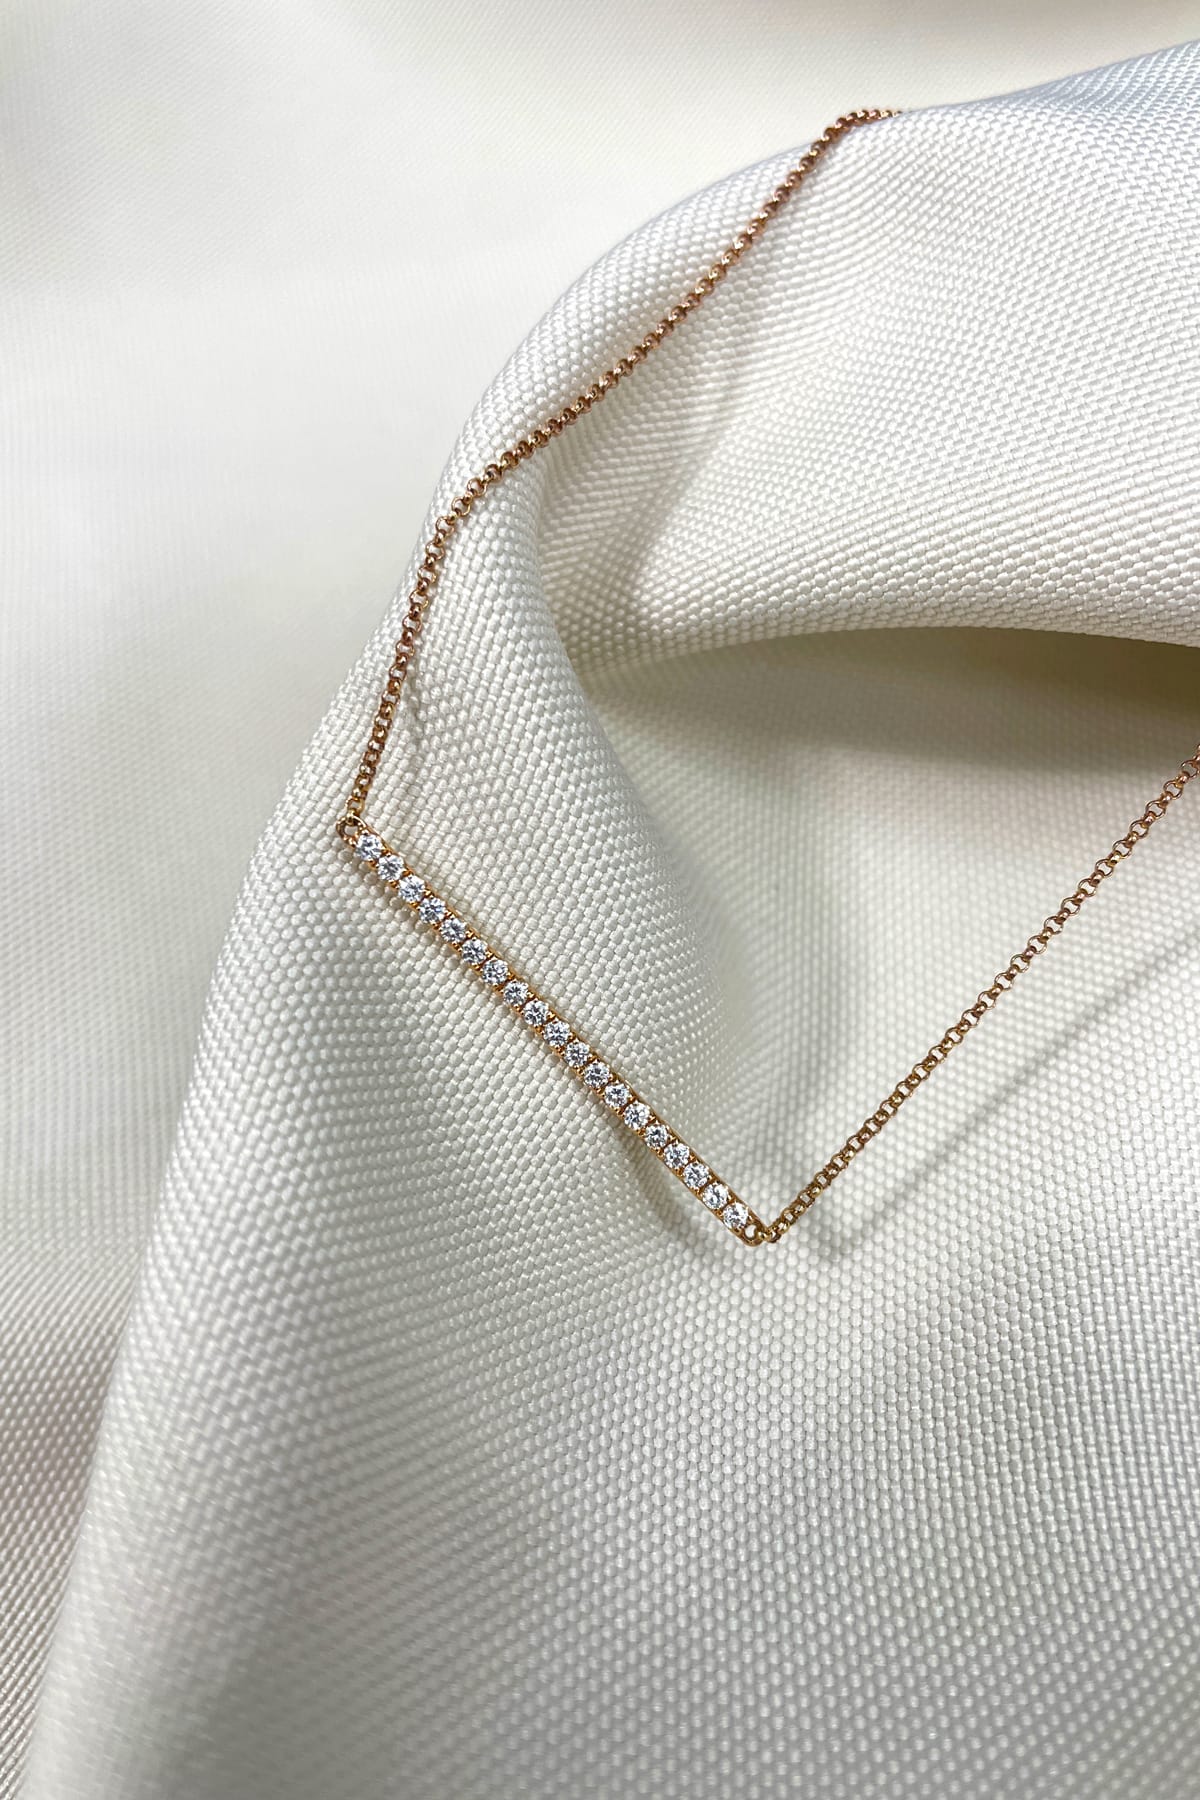 18 Carat Gold Straight Diamond Bar Pendant available at LeGassick Diamonds and Jewellery Gold Coast, Australia.